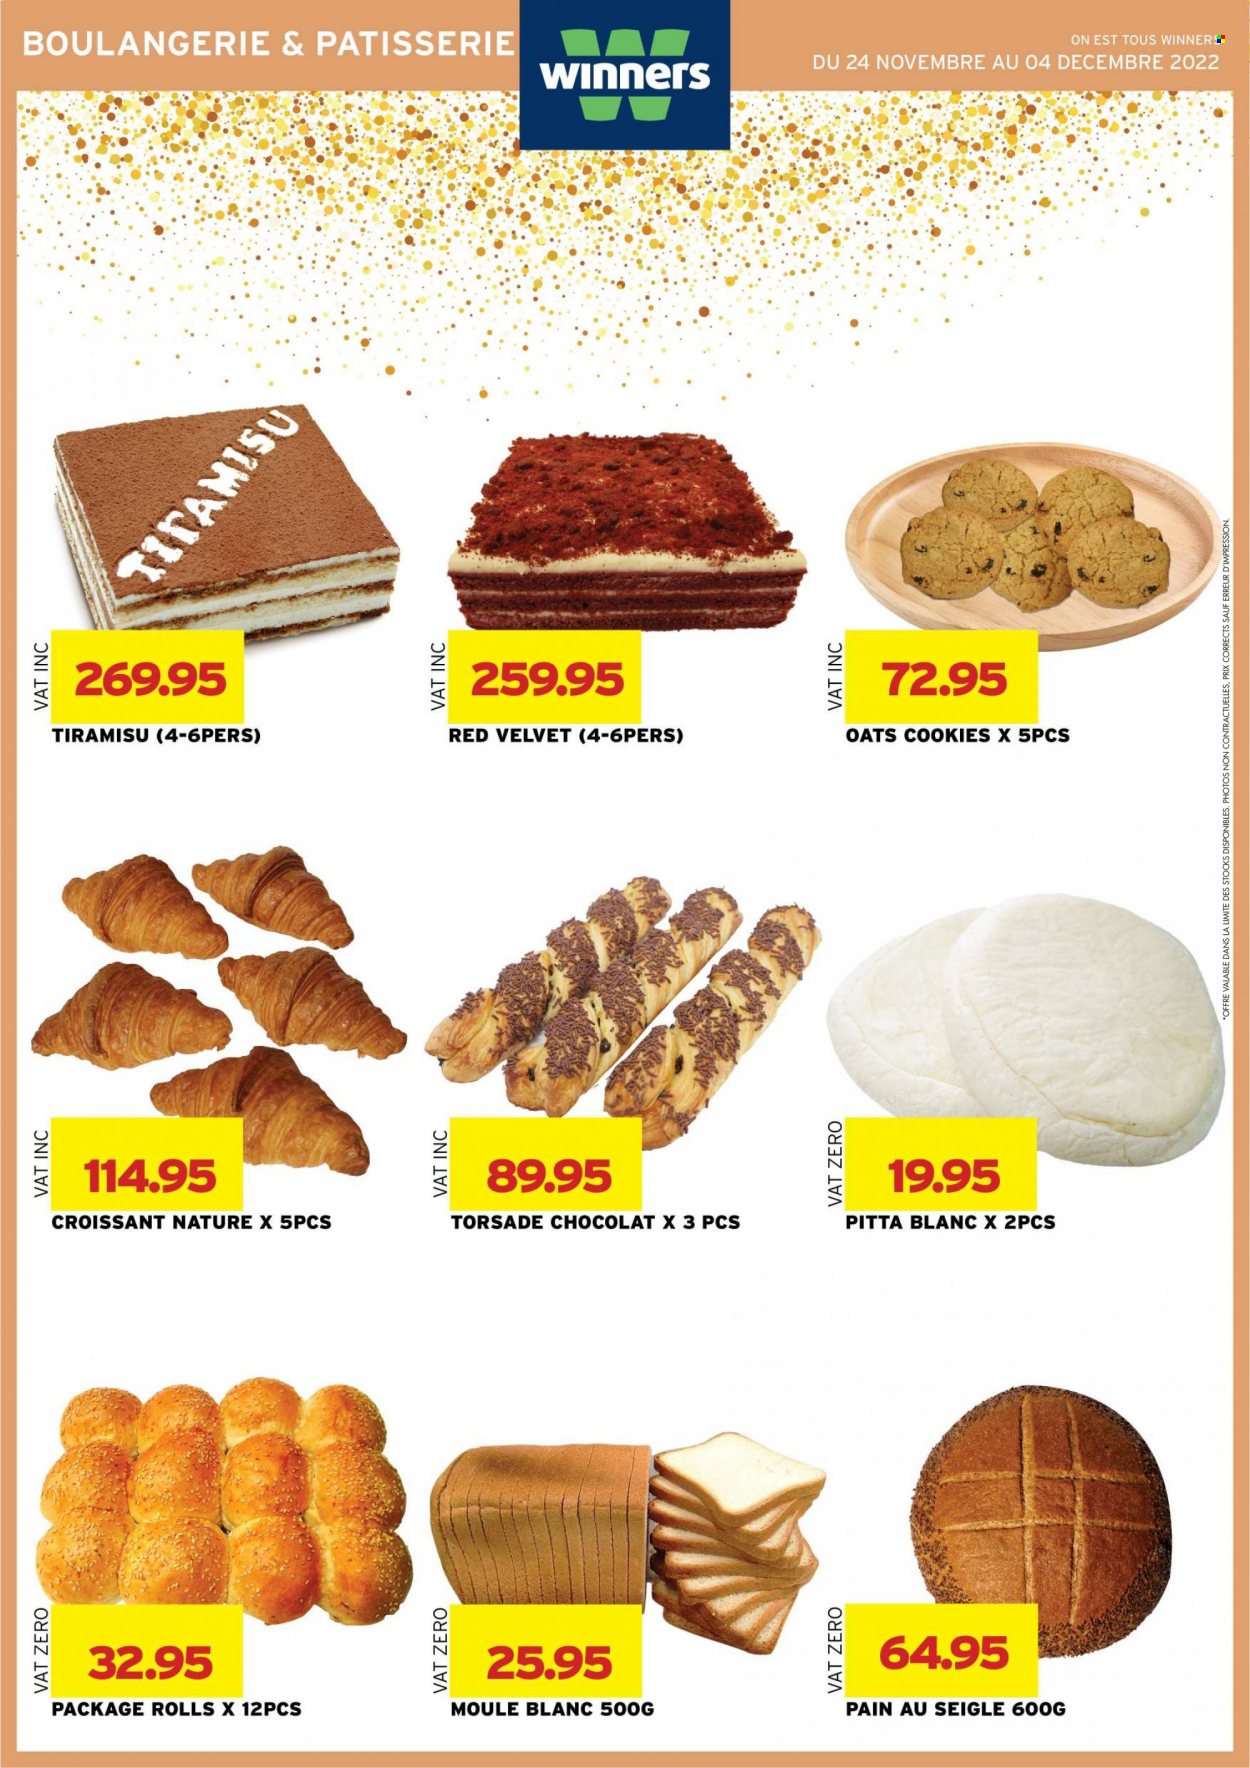 thumbnail - Winner's Catalogue - 24.11.2022 - 4.12.2022 - Sales products - croissant, tiramisu, cookies, oats. Page 6.